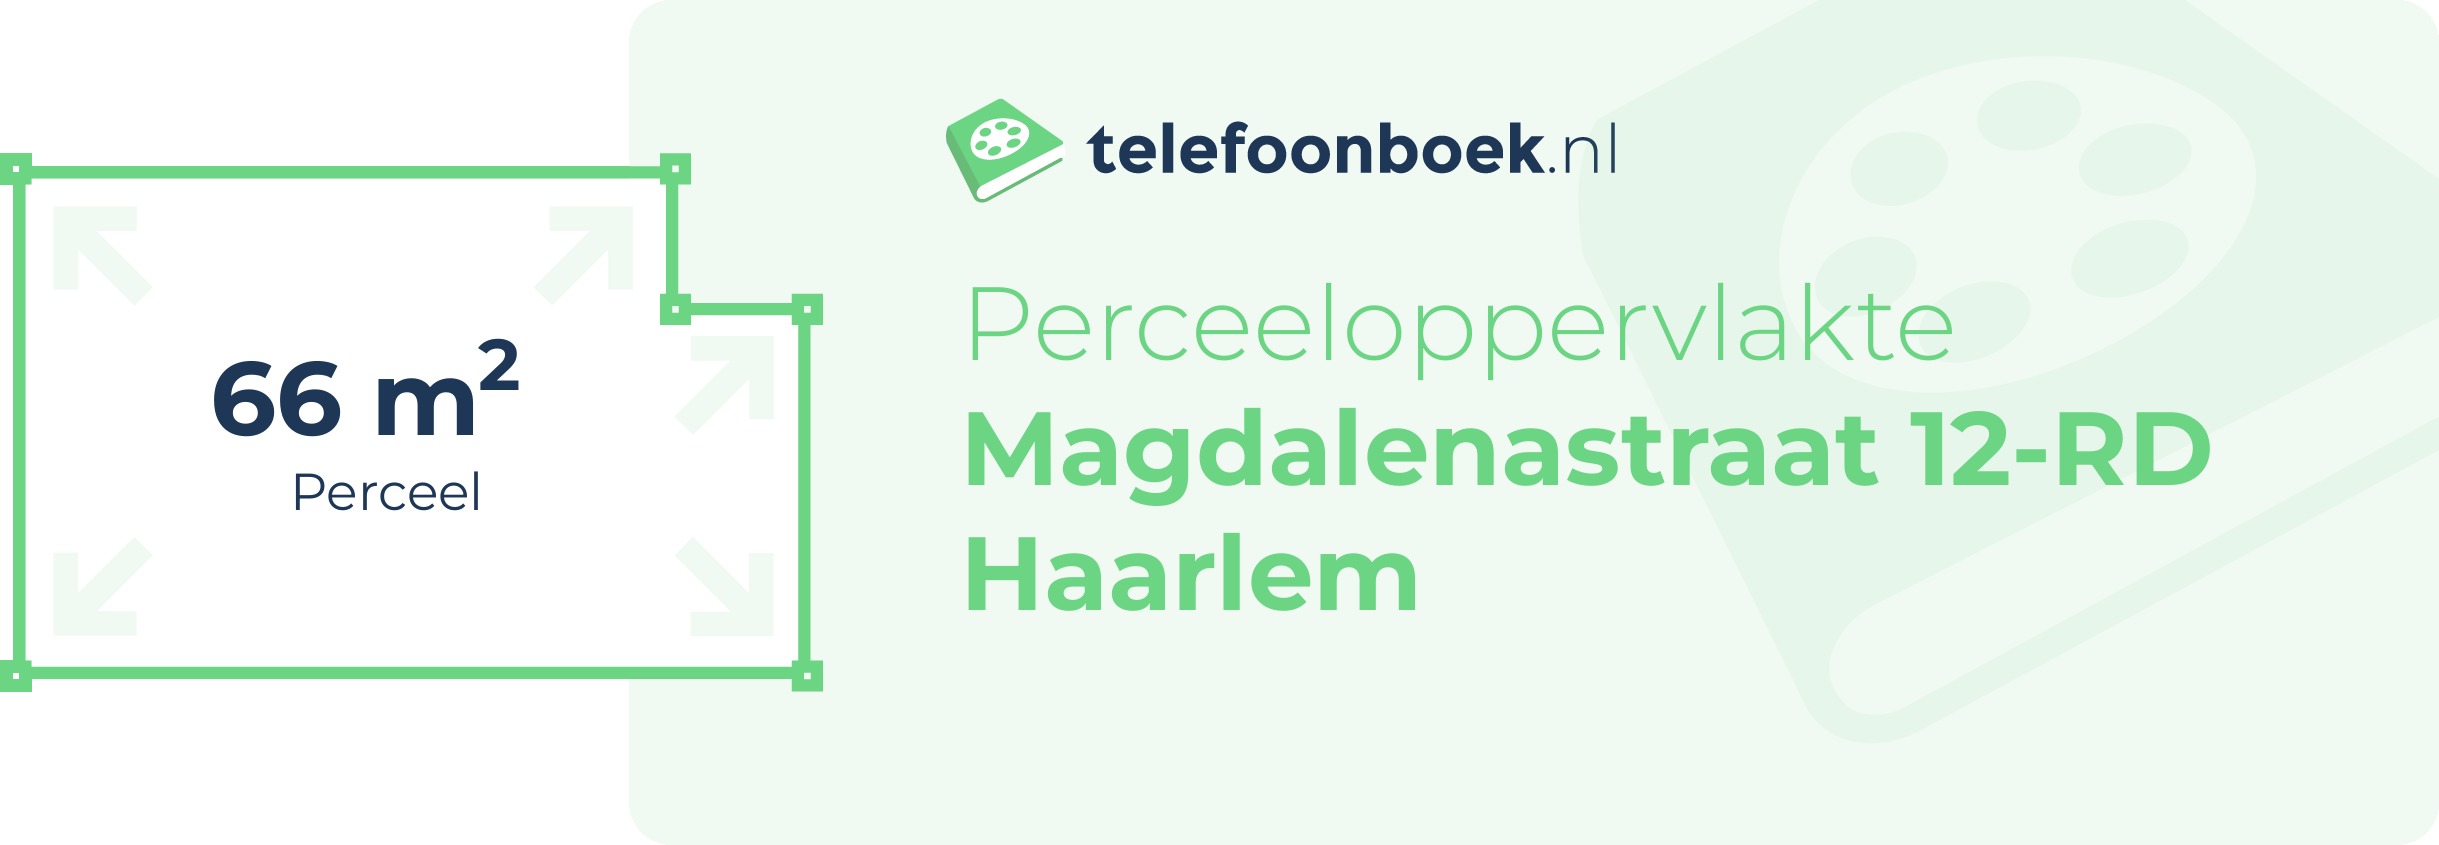 Perceeloppervlakte Magdalenastraat 12-RD Haarlem